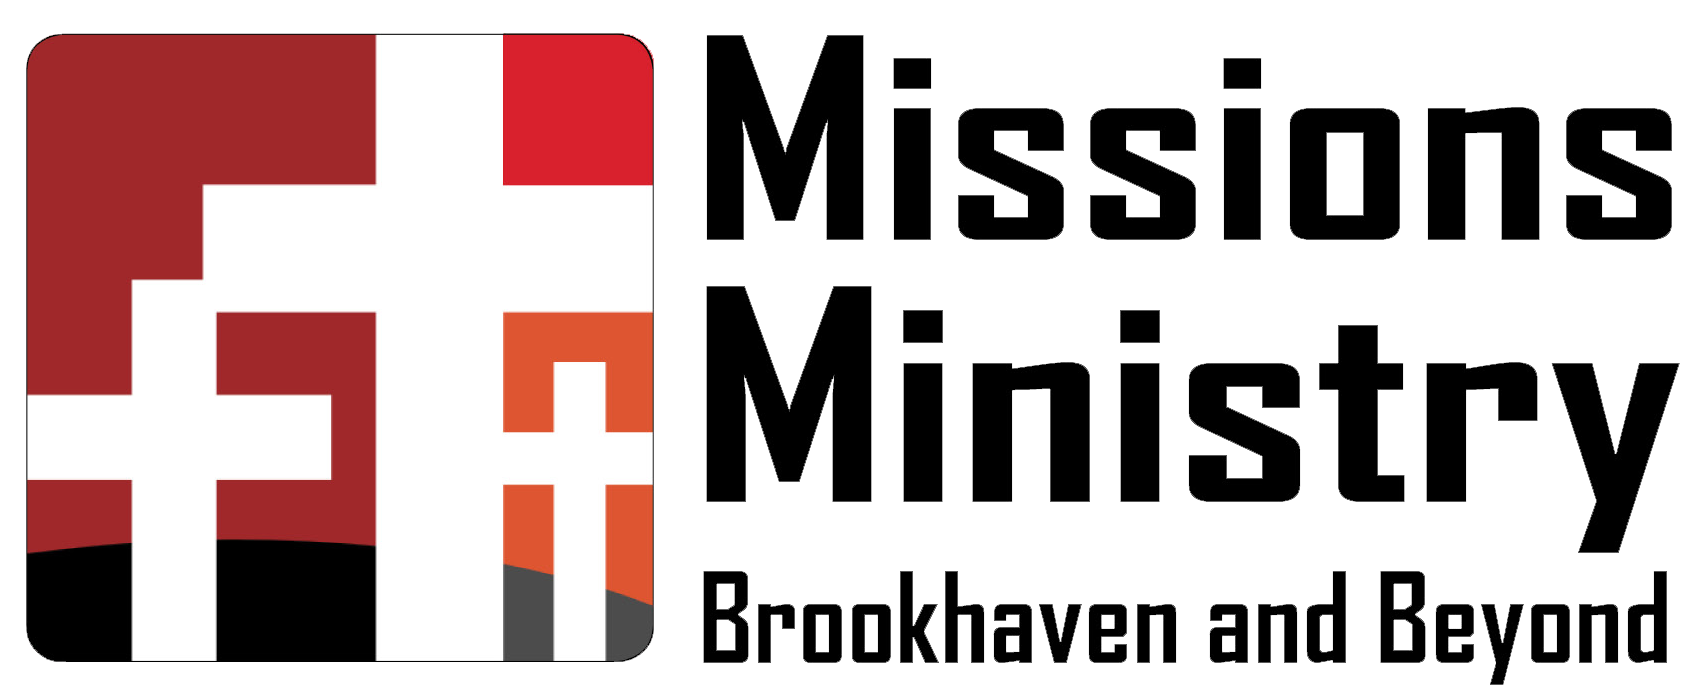 2018 Missions logo 3